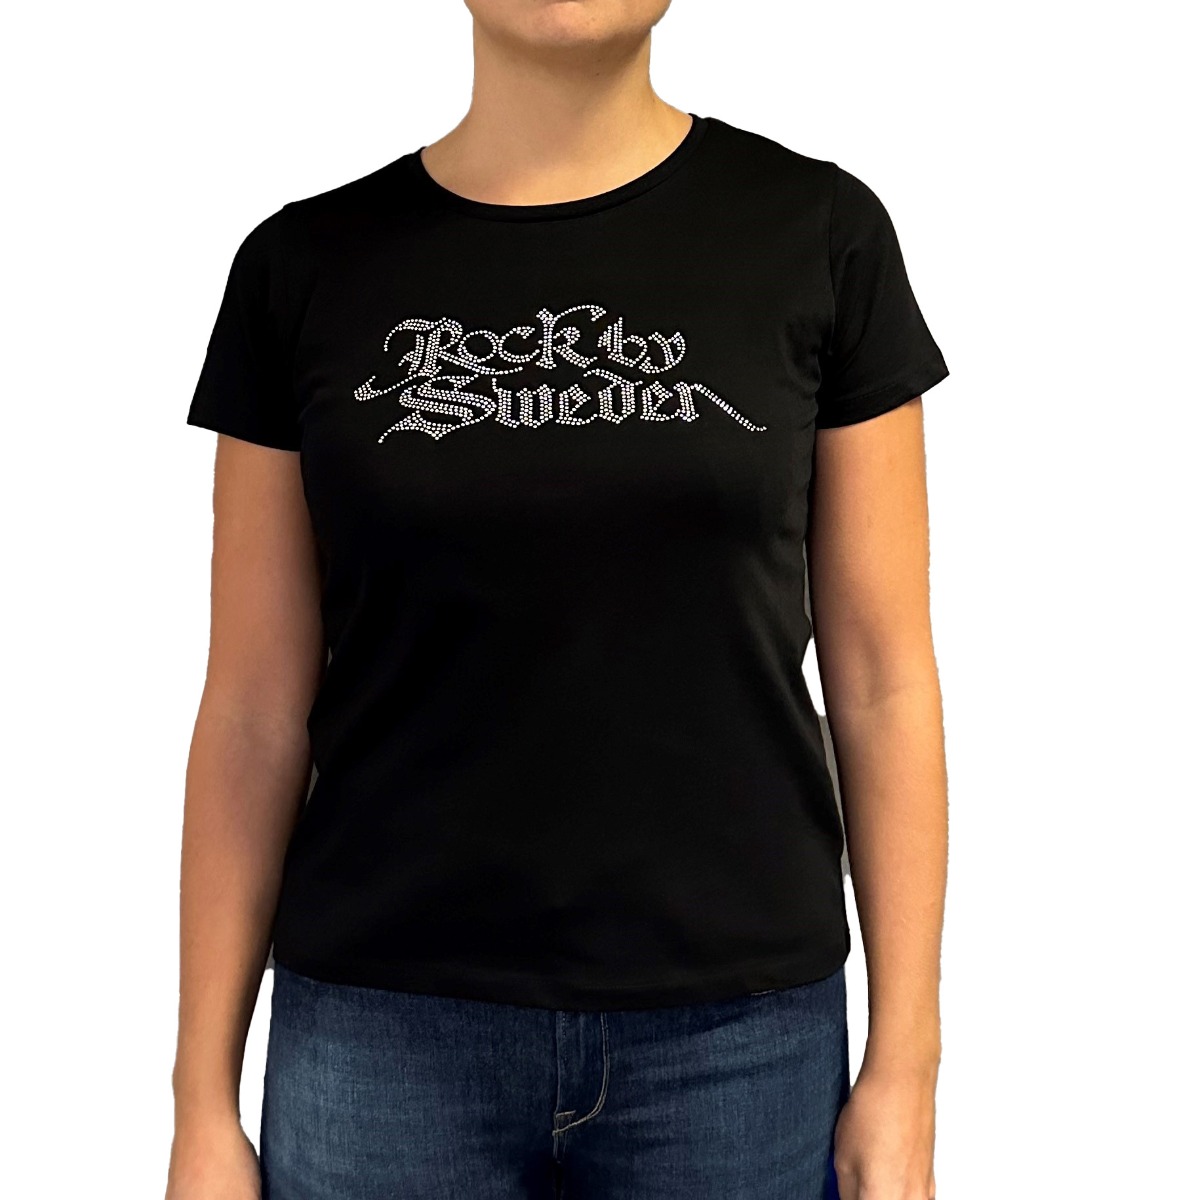 Rhinestone T-shirt damproduktzoombild #3